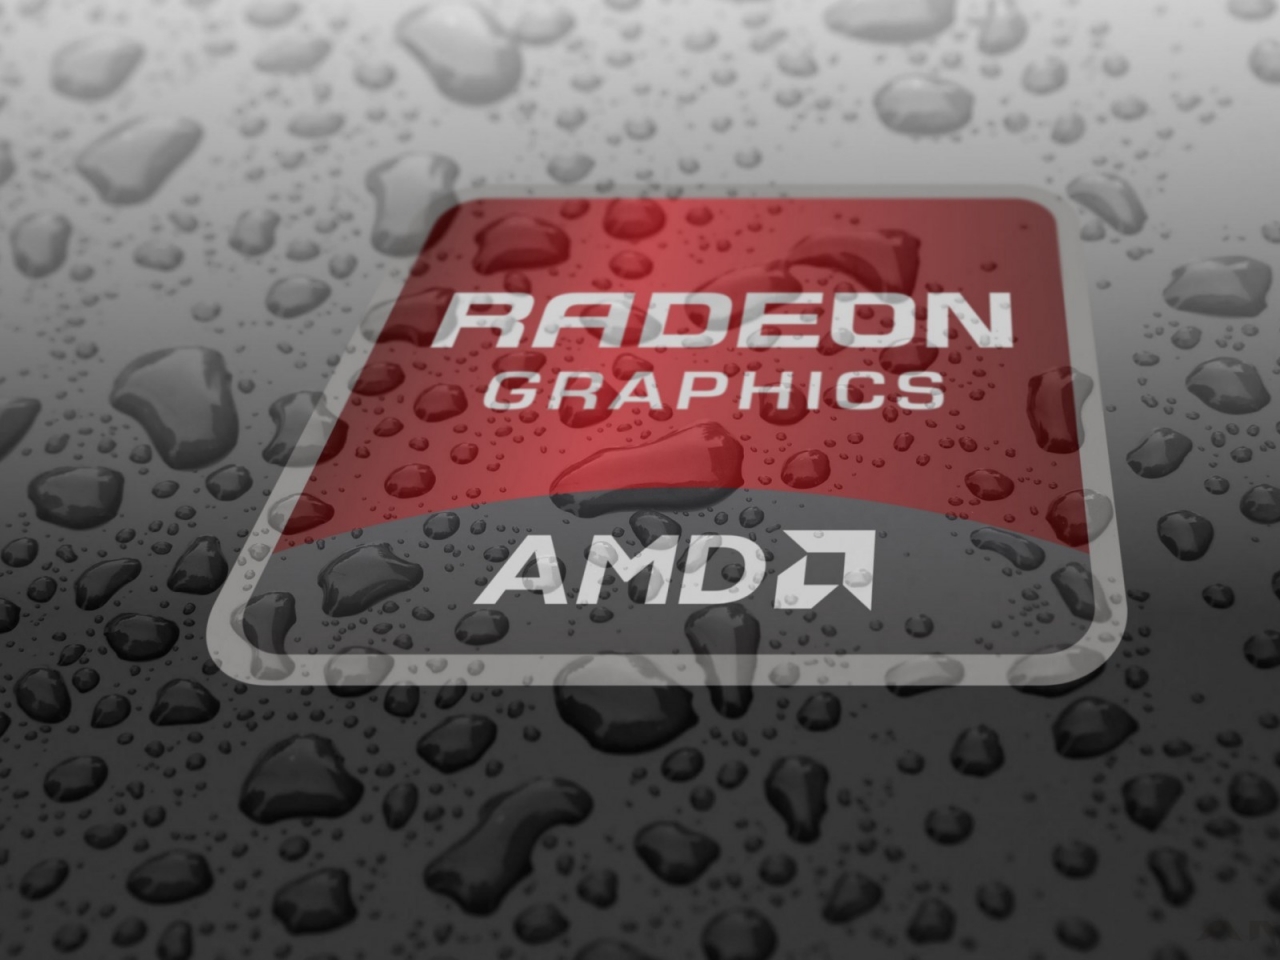 Radeon Graphics AMD for 1280 x 960 resolution